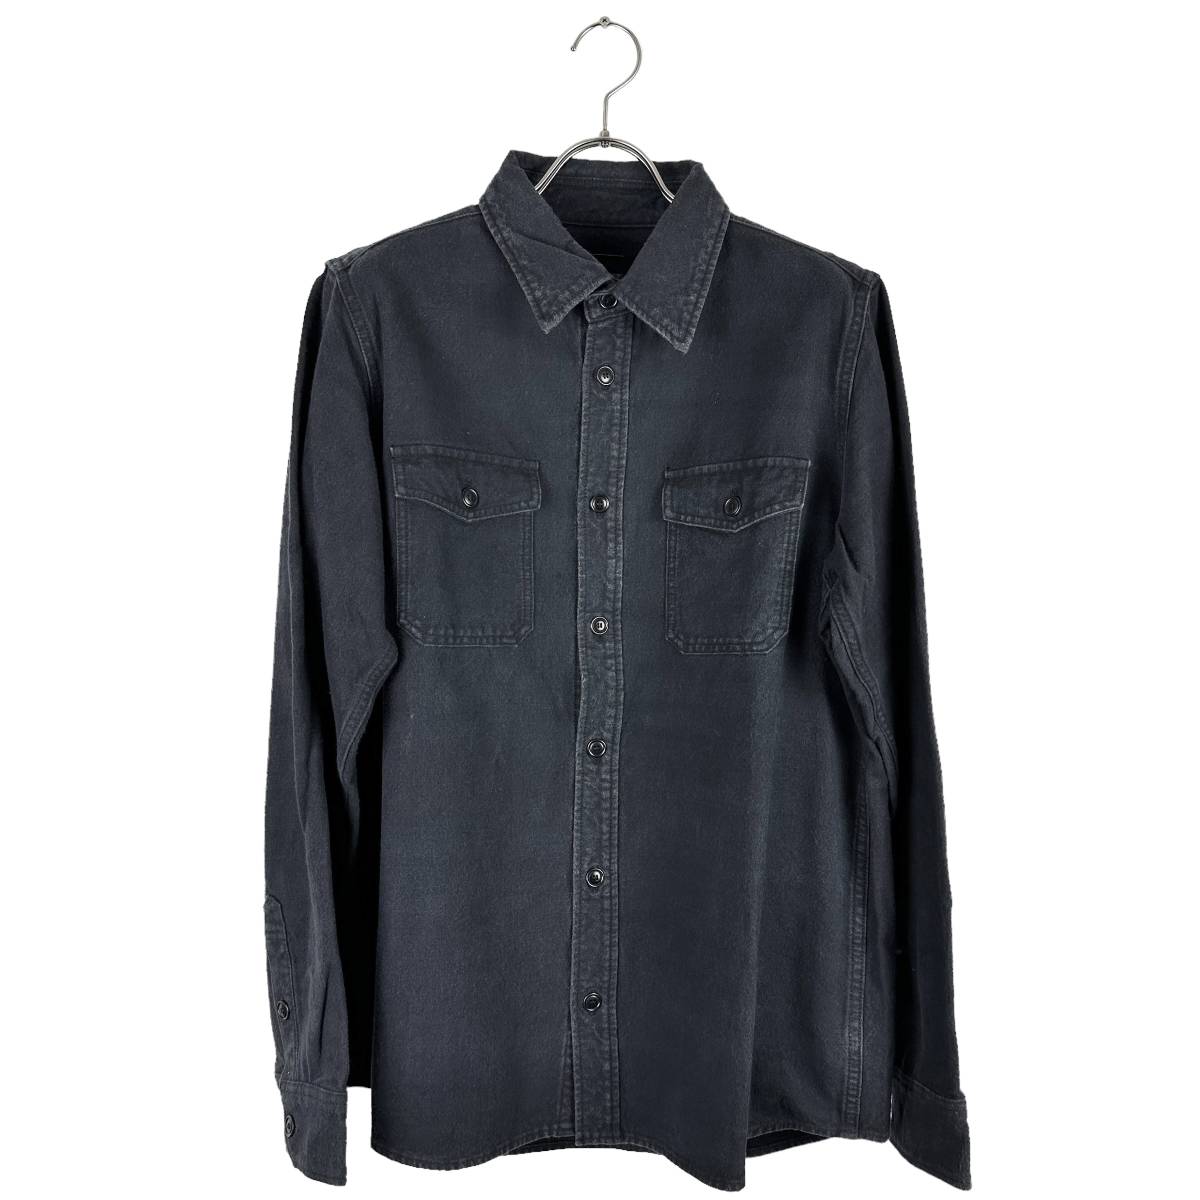 VISVIM(ビズビム) I.C.T ELK flannel shirts (black)